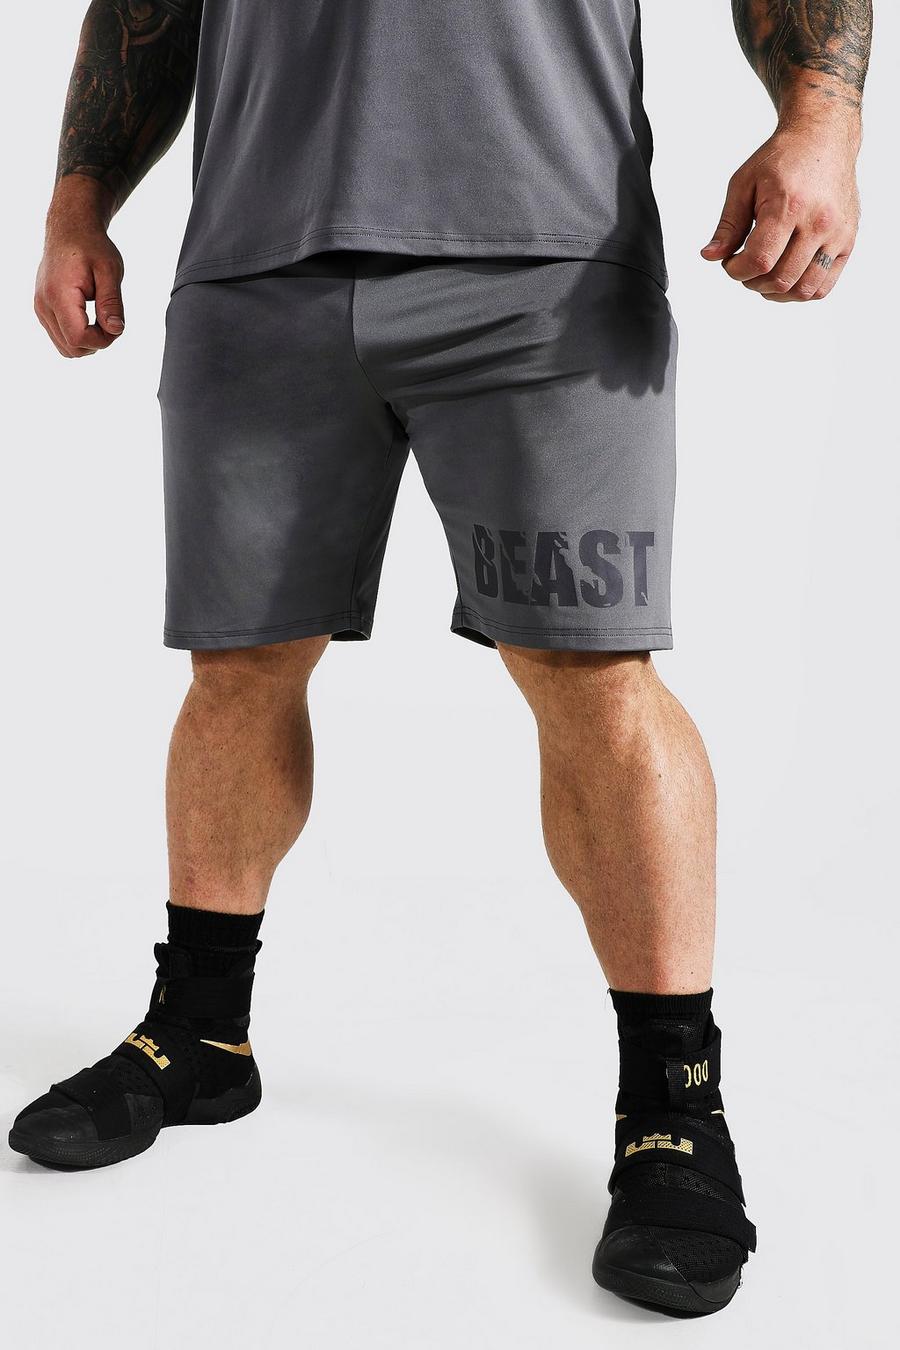 Pantalón corto MAN Active x Beast resistente, Charcoal grigio image number 1